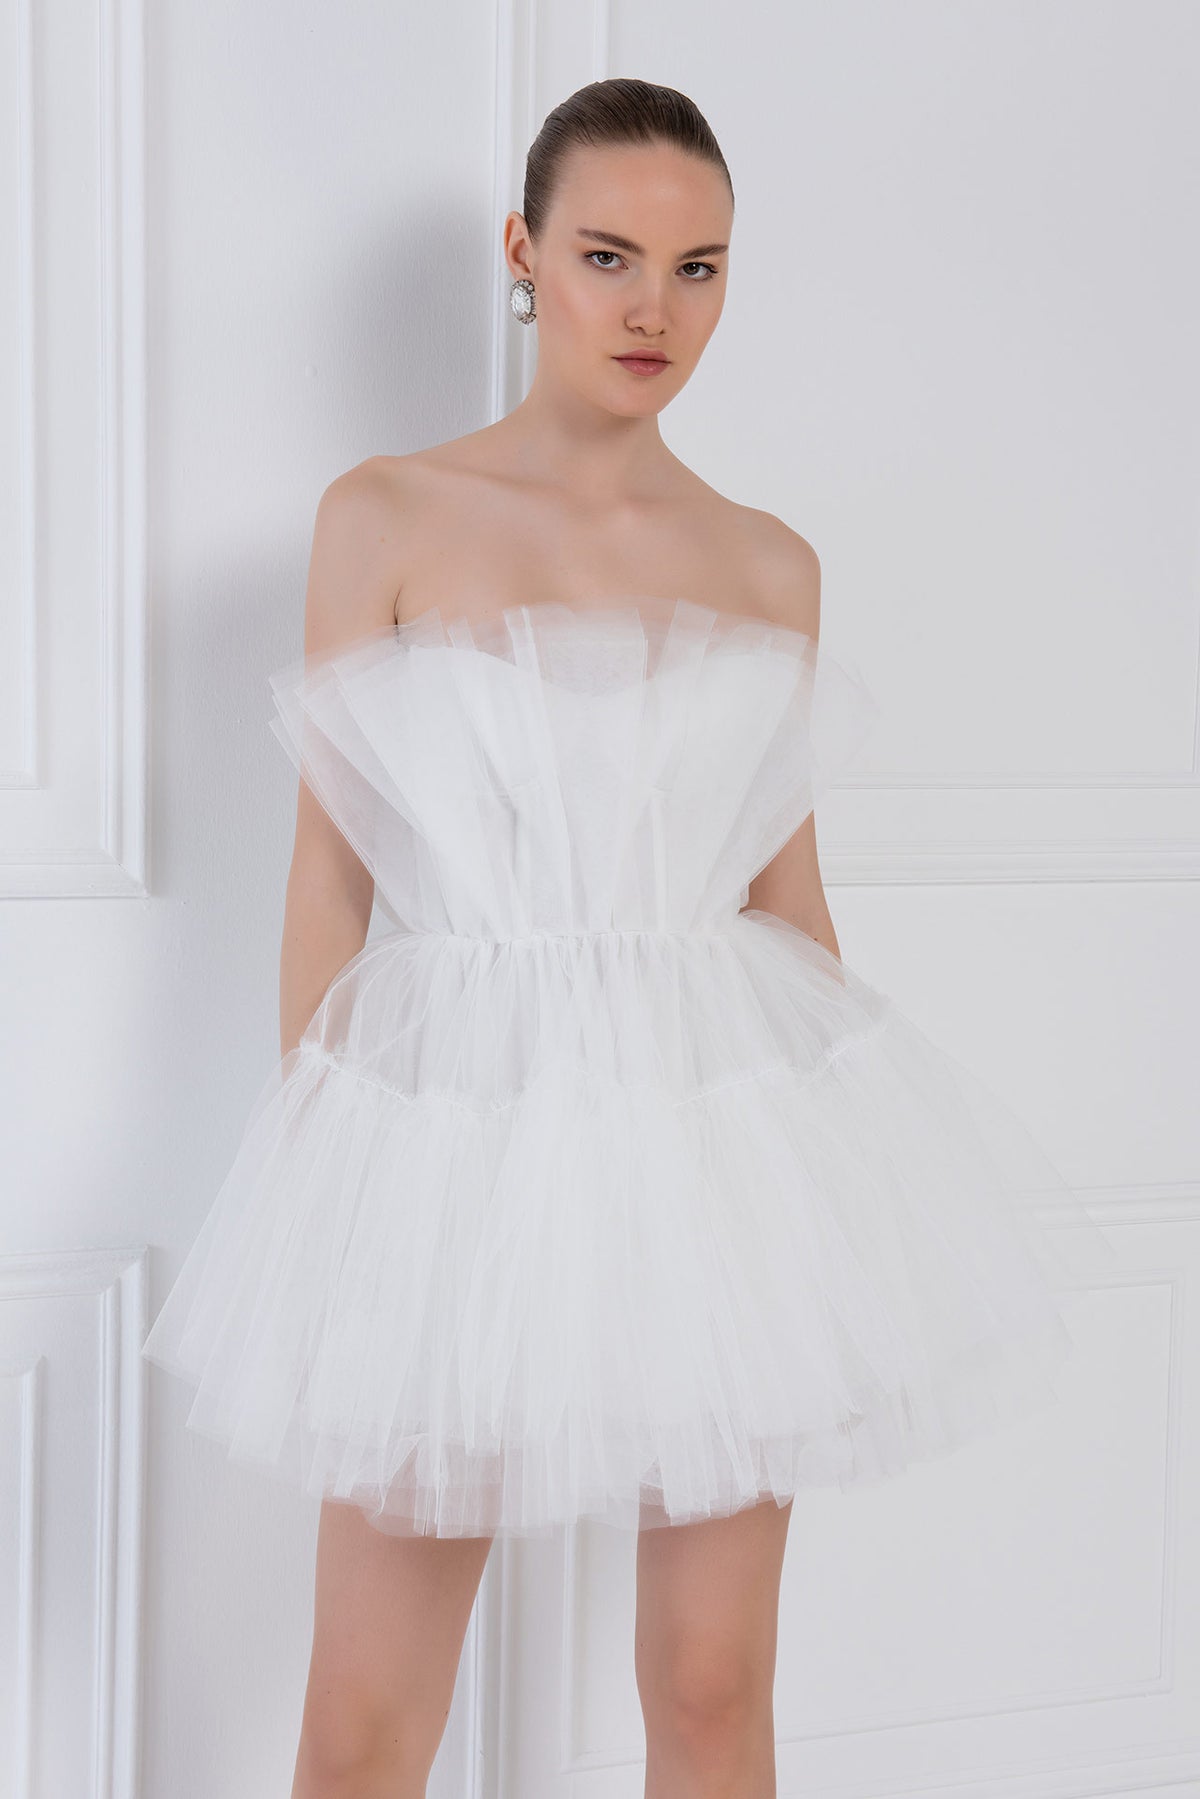 Zoey Layered Pink Tulle Loofa Mini Dress - White